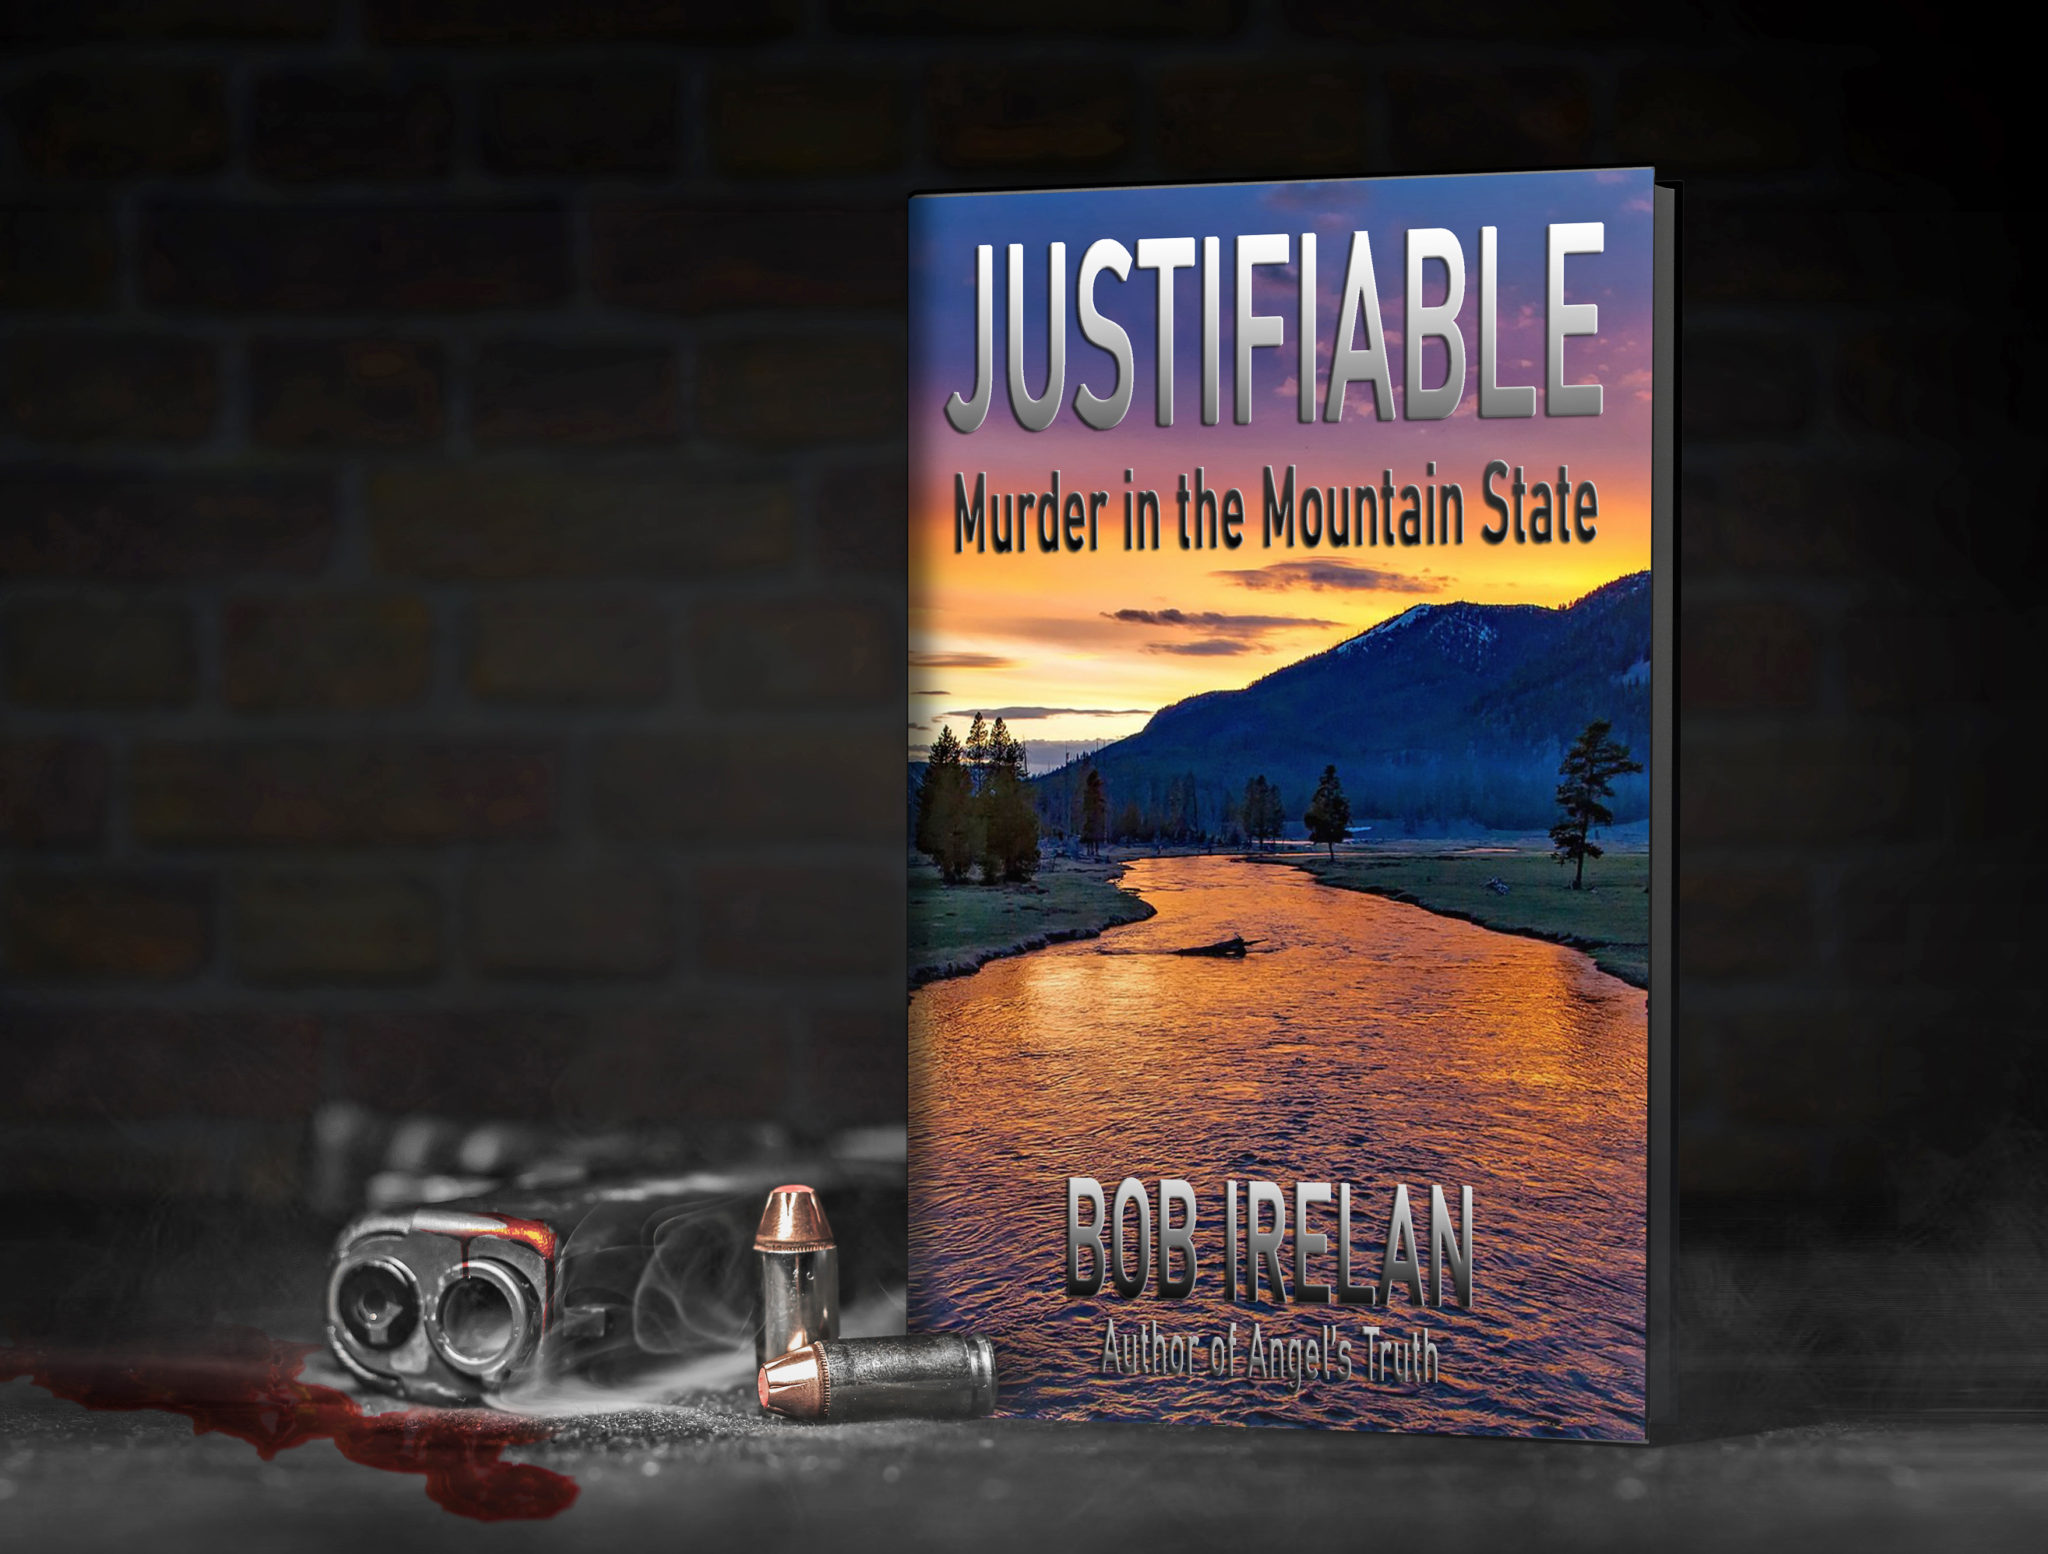 Bob Irelan's novel, Justifiable